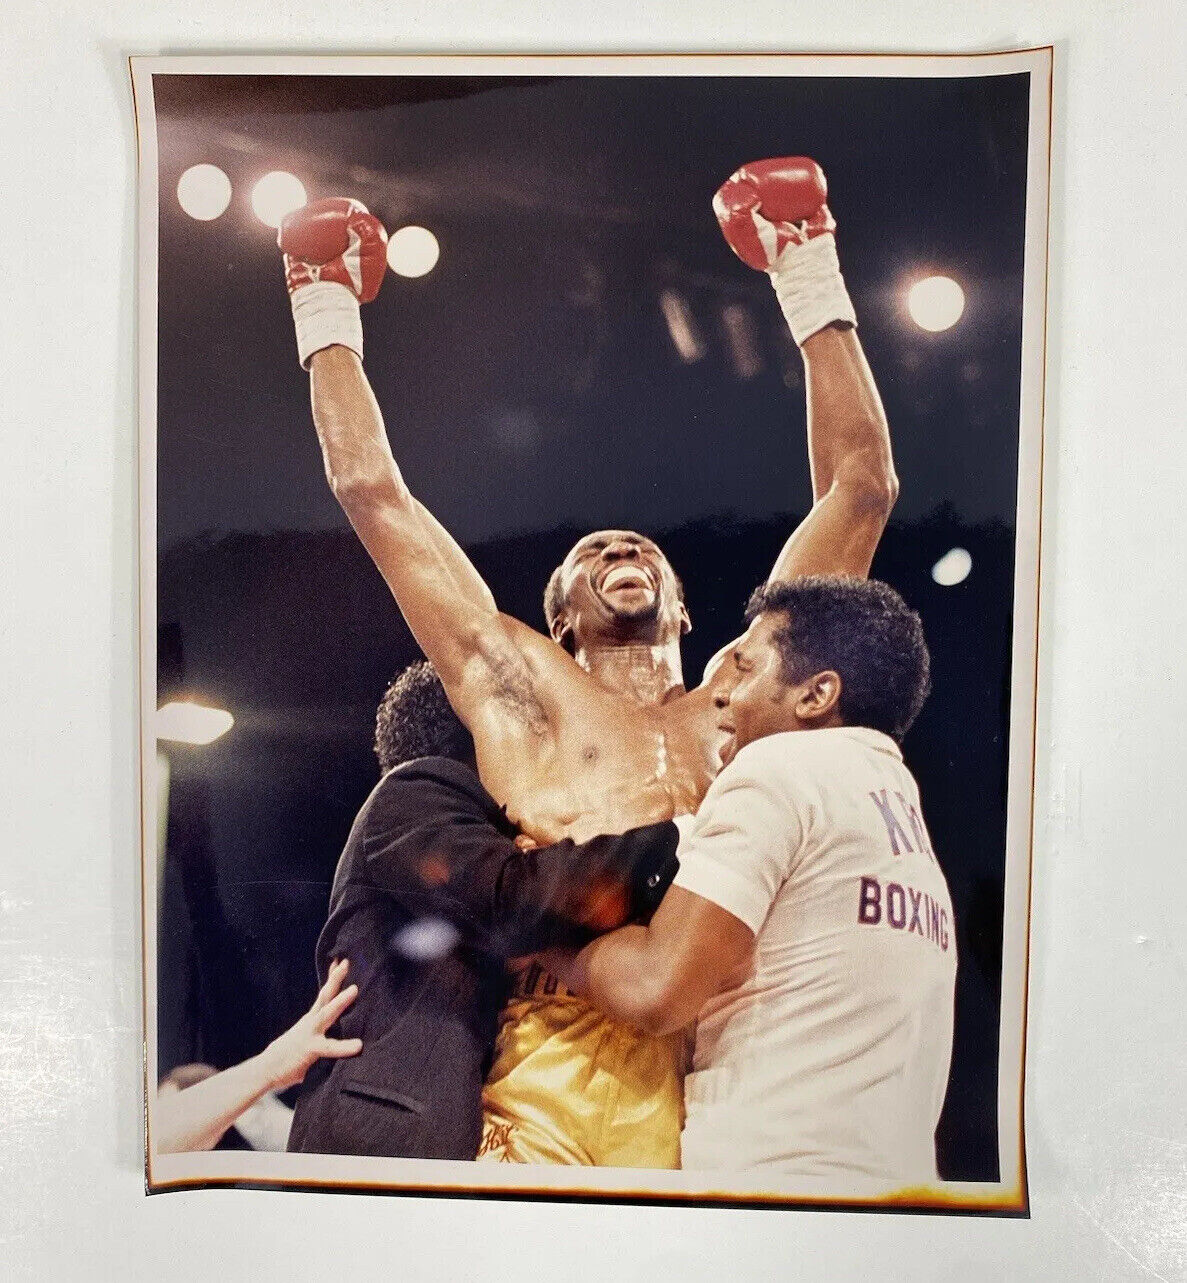 Lennox Red McLendon Thomas Hitman Hearns Boxing Associated Press Photo